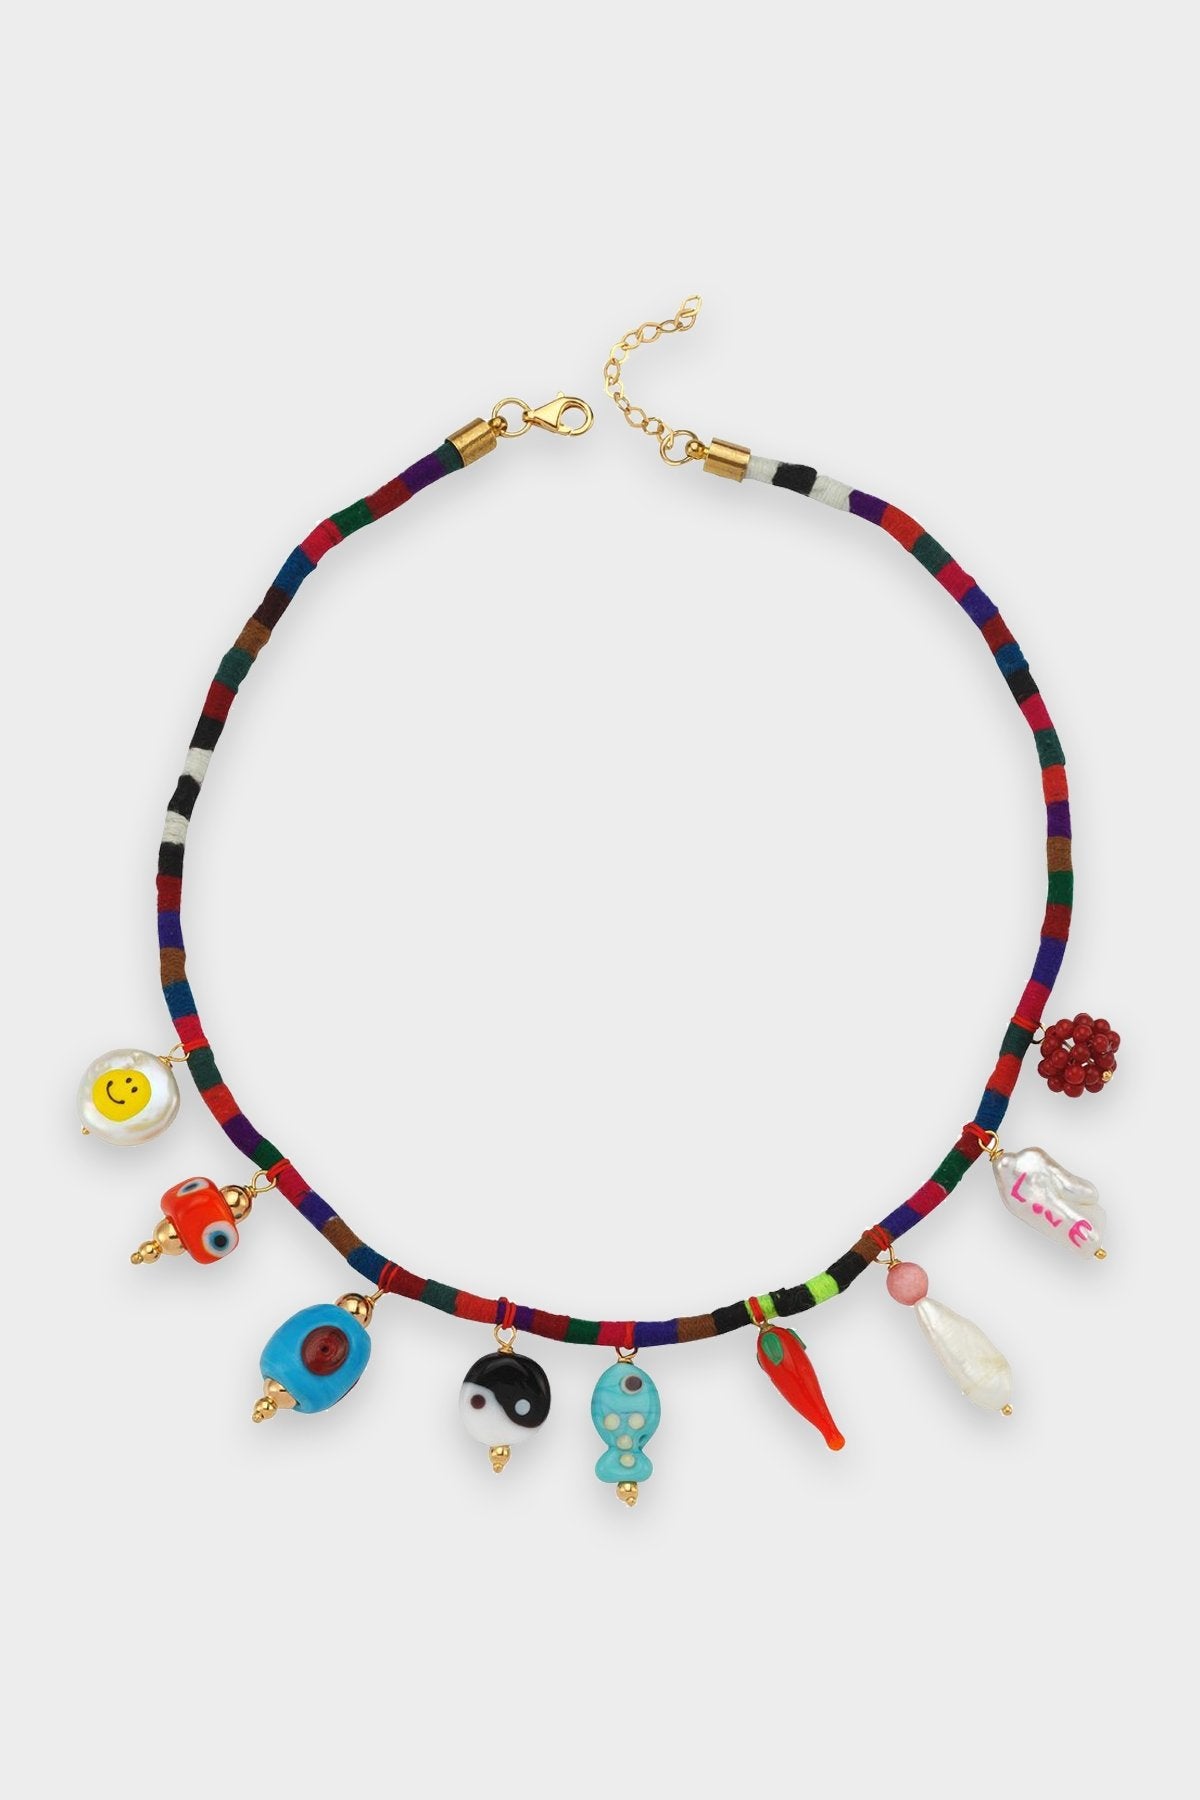 Rio Necklace in Mix Colors - shop-olivia.com